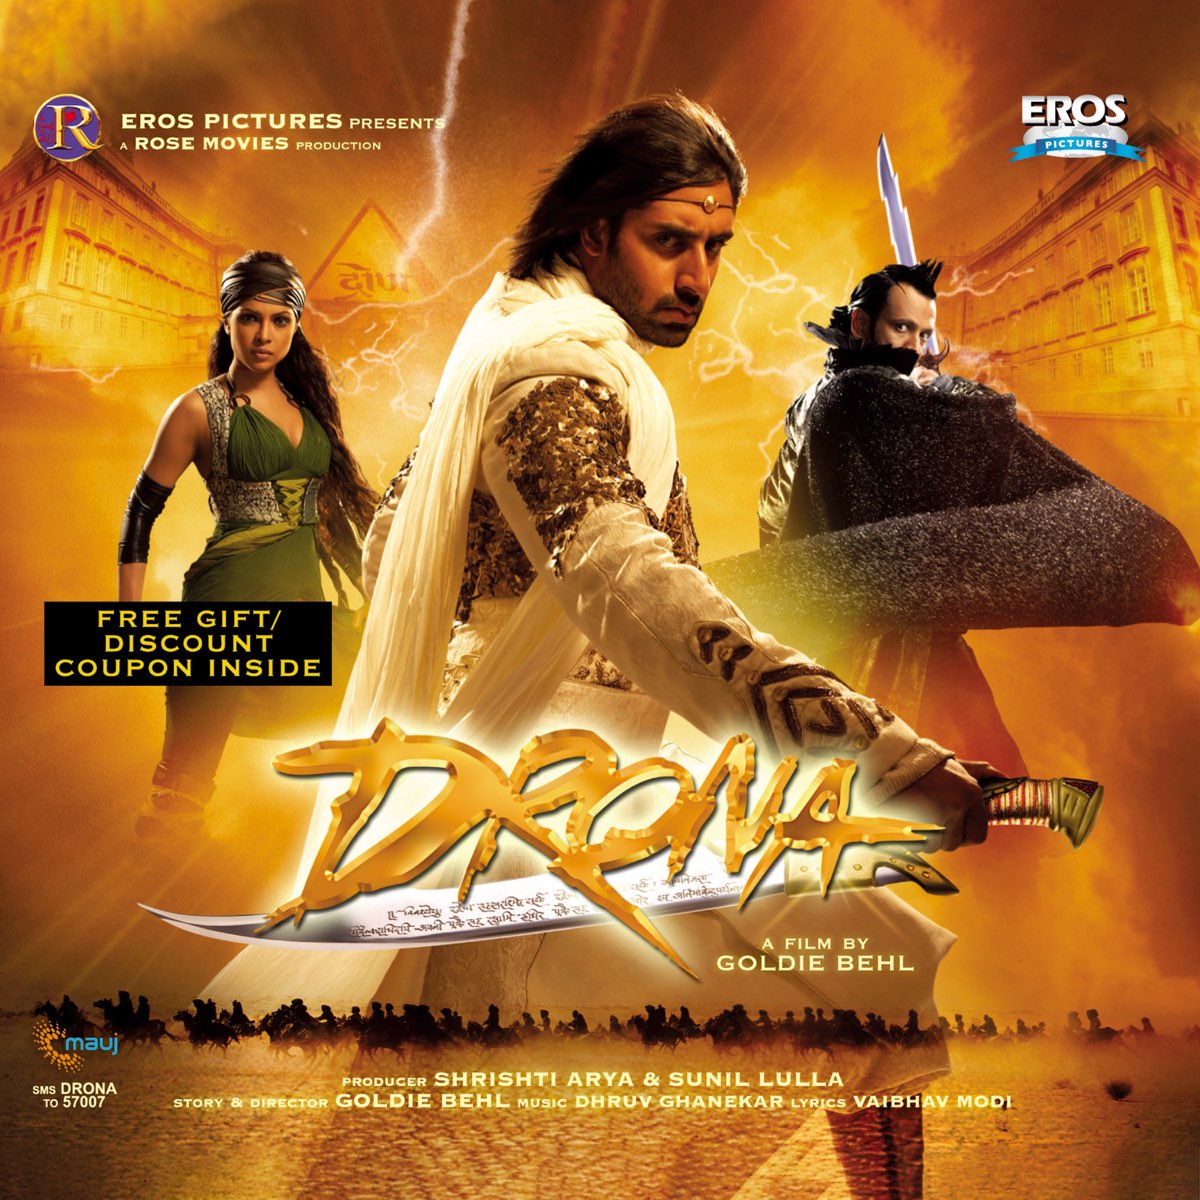 Drona (Original Motion Picture Soundtrack) by Dhruv Ghanekar on Apple Music